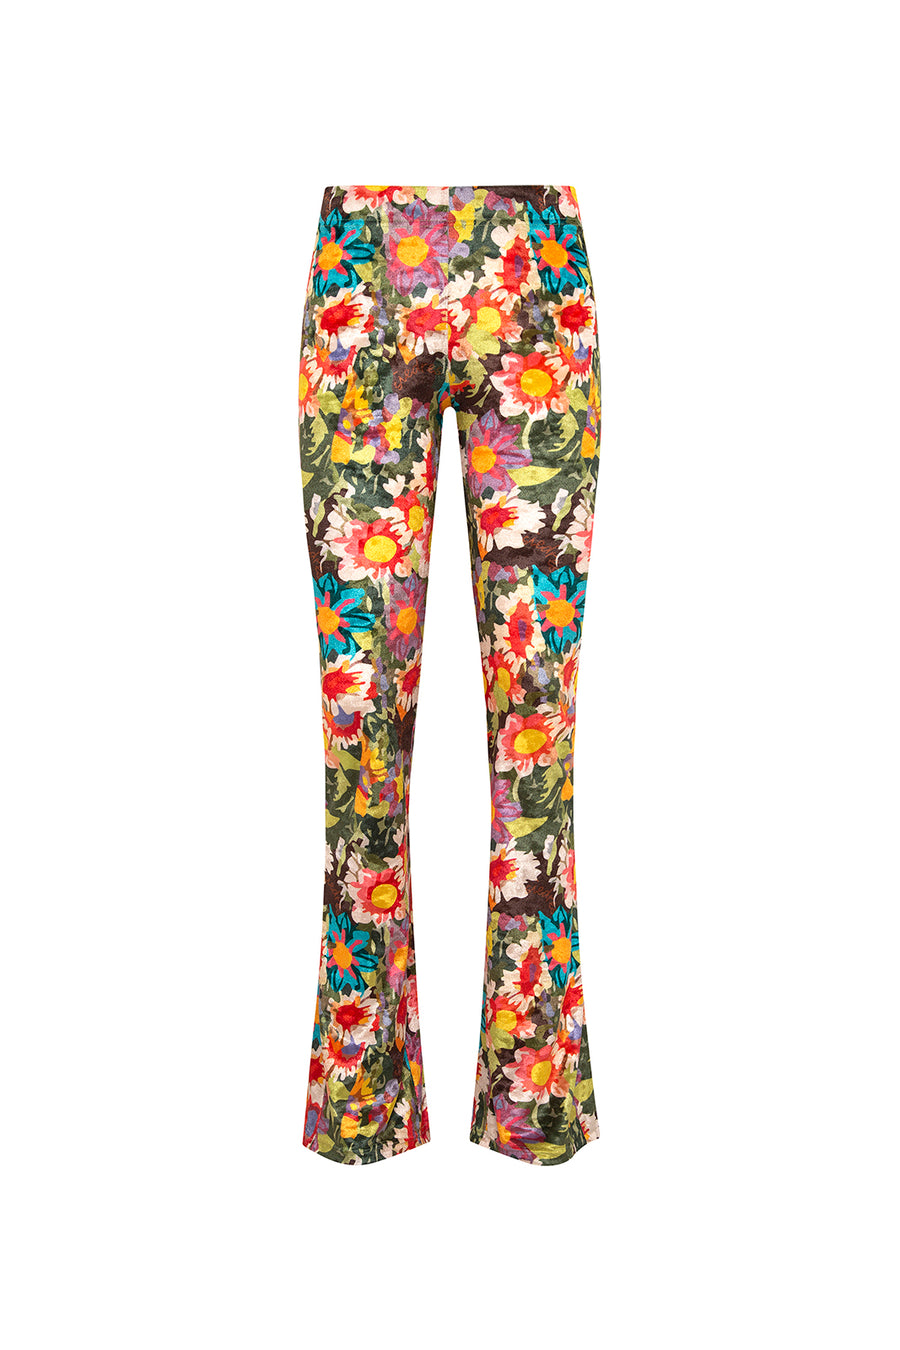 FLO - Floral velvet pants